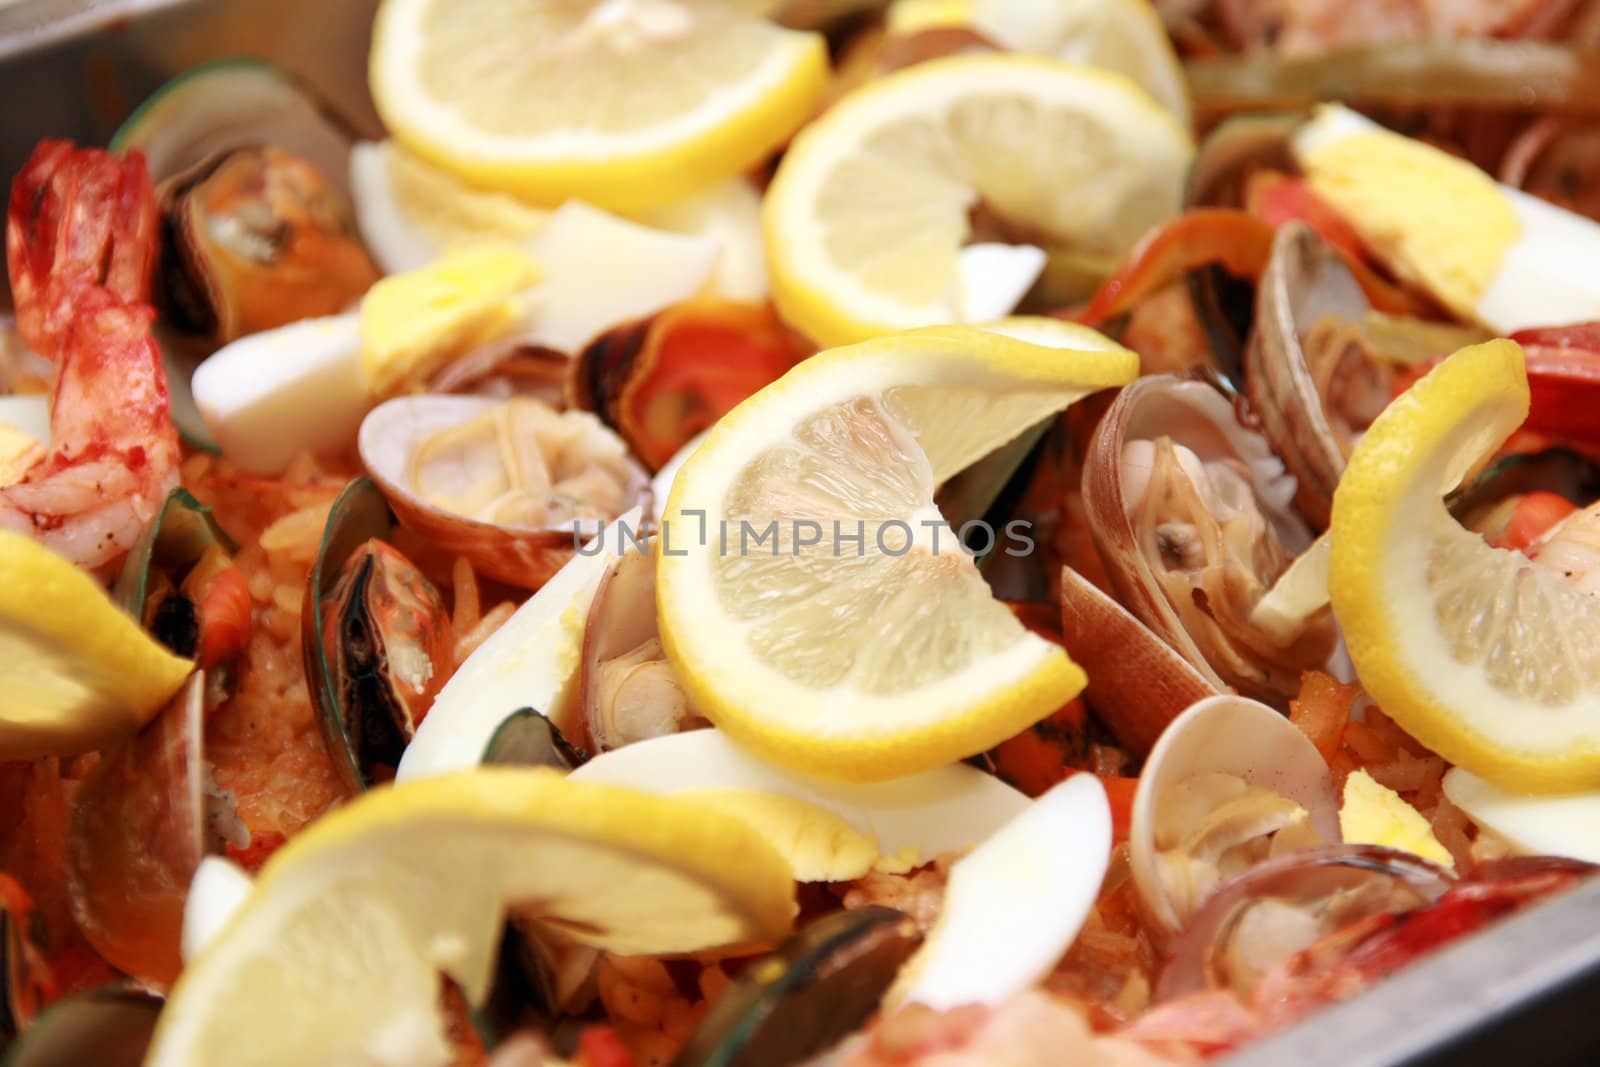 seafood paella 2 by jonasbsl